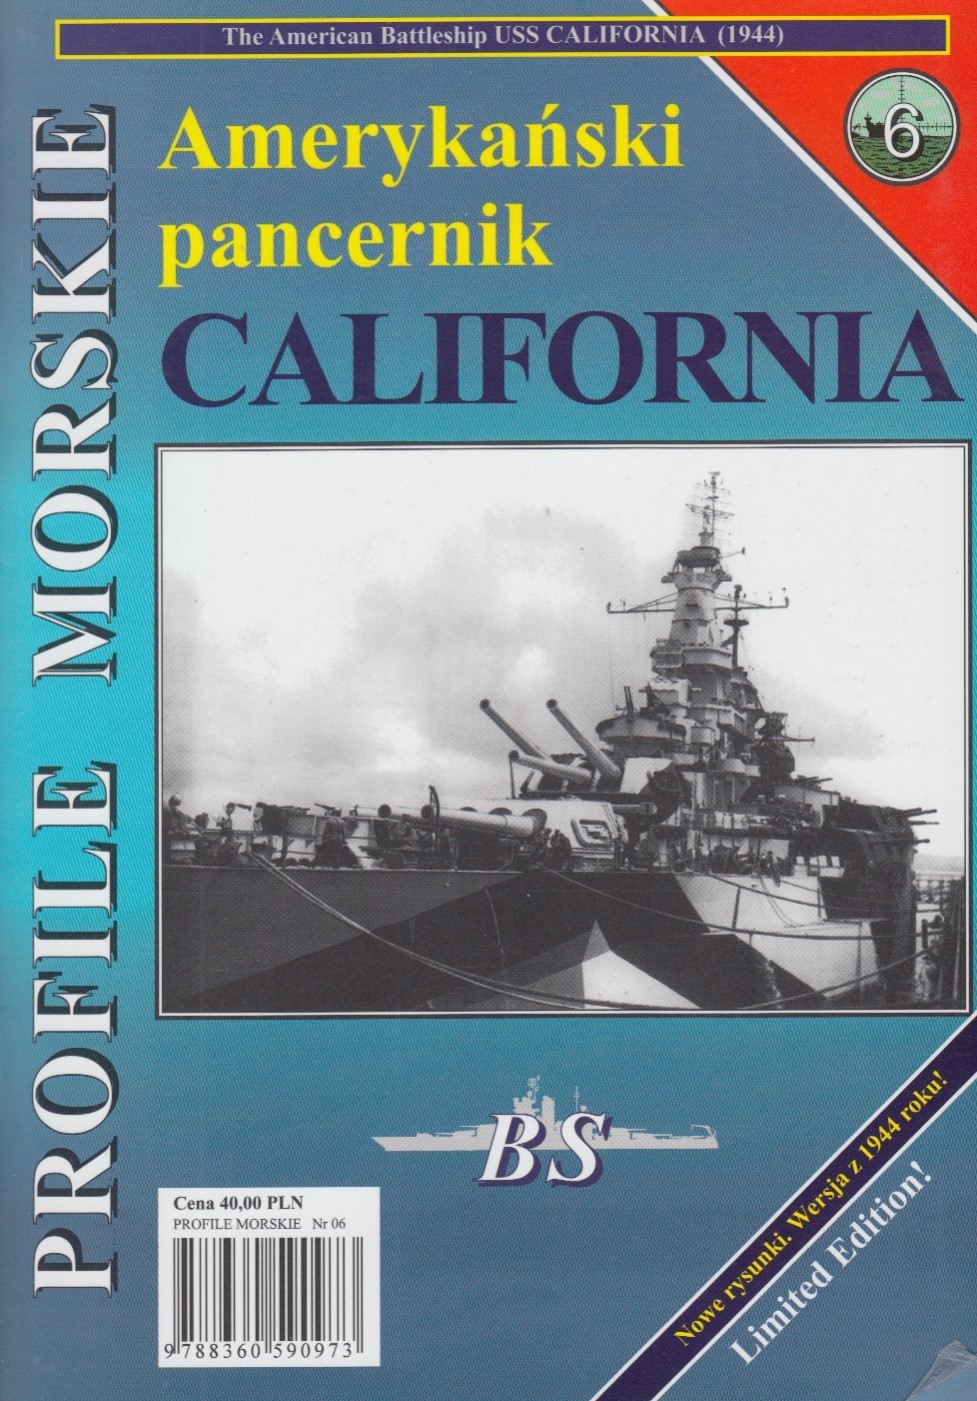 Battleship USS CALIFORNIA